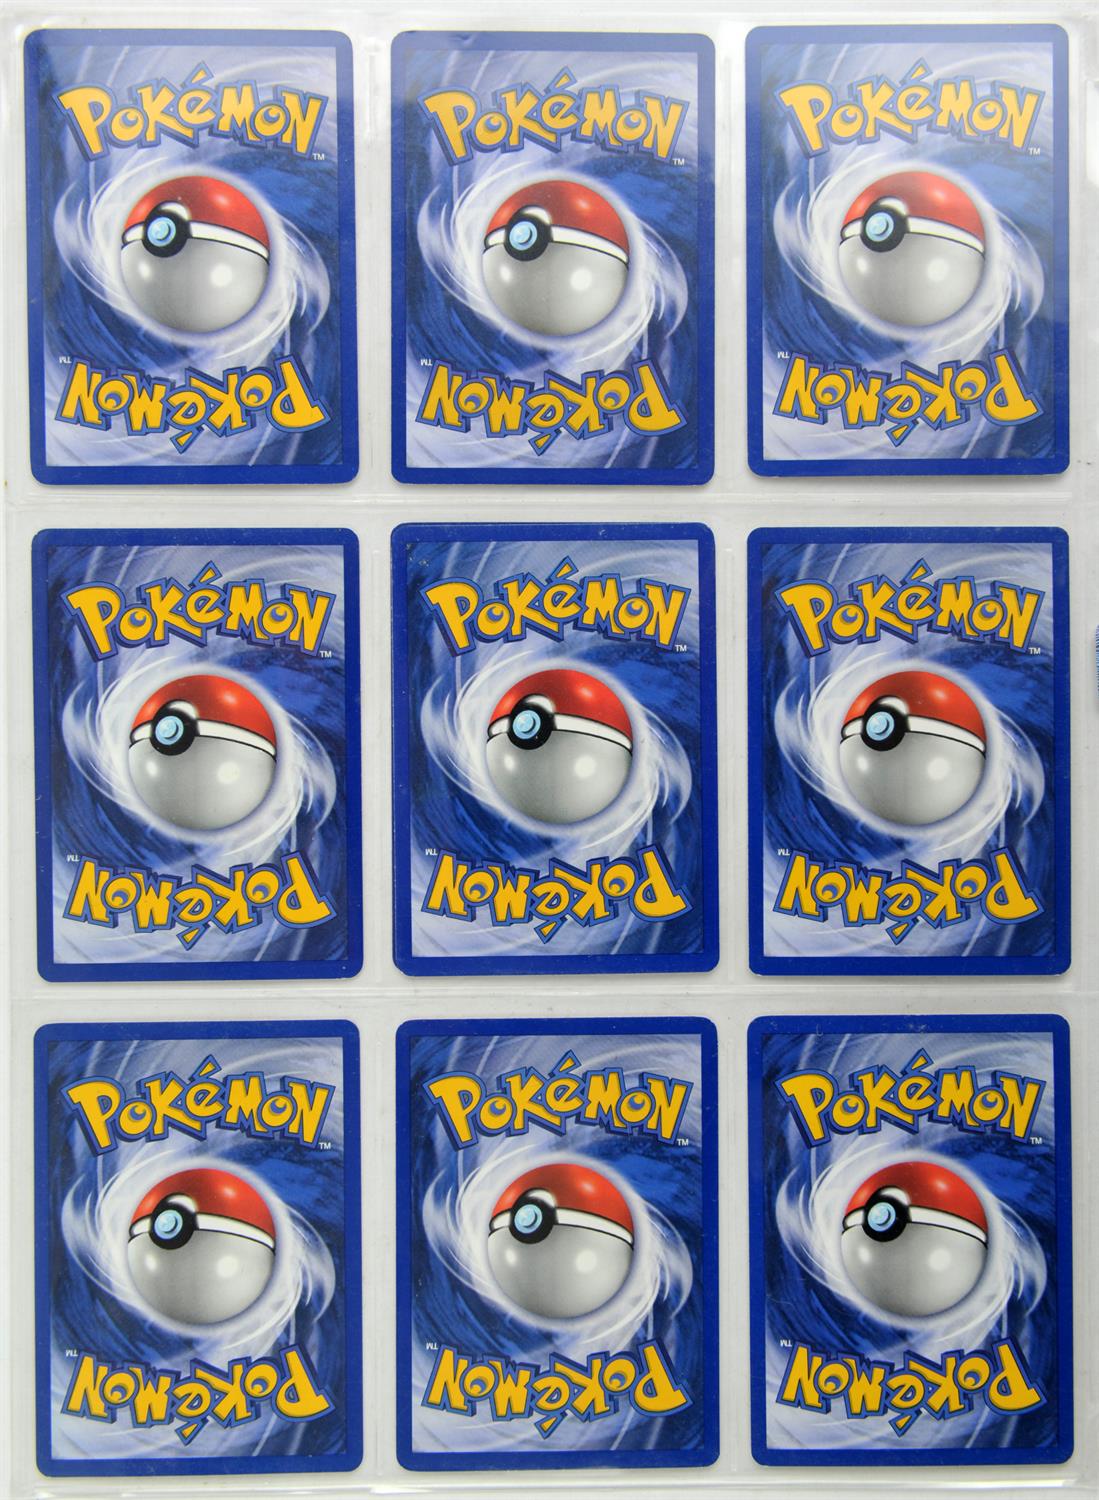 Pokemon TCG. Lot of around 60-70 vintage Pokémon cards from Base, Jungle, Fossil, - Image 10 of 16